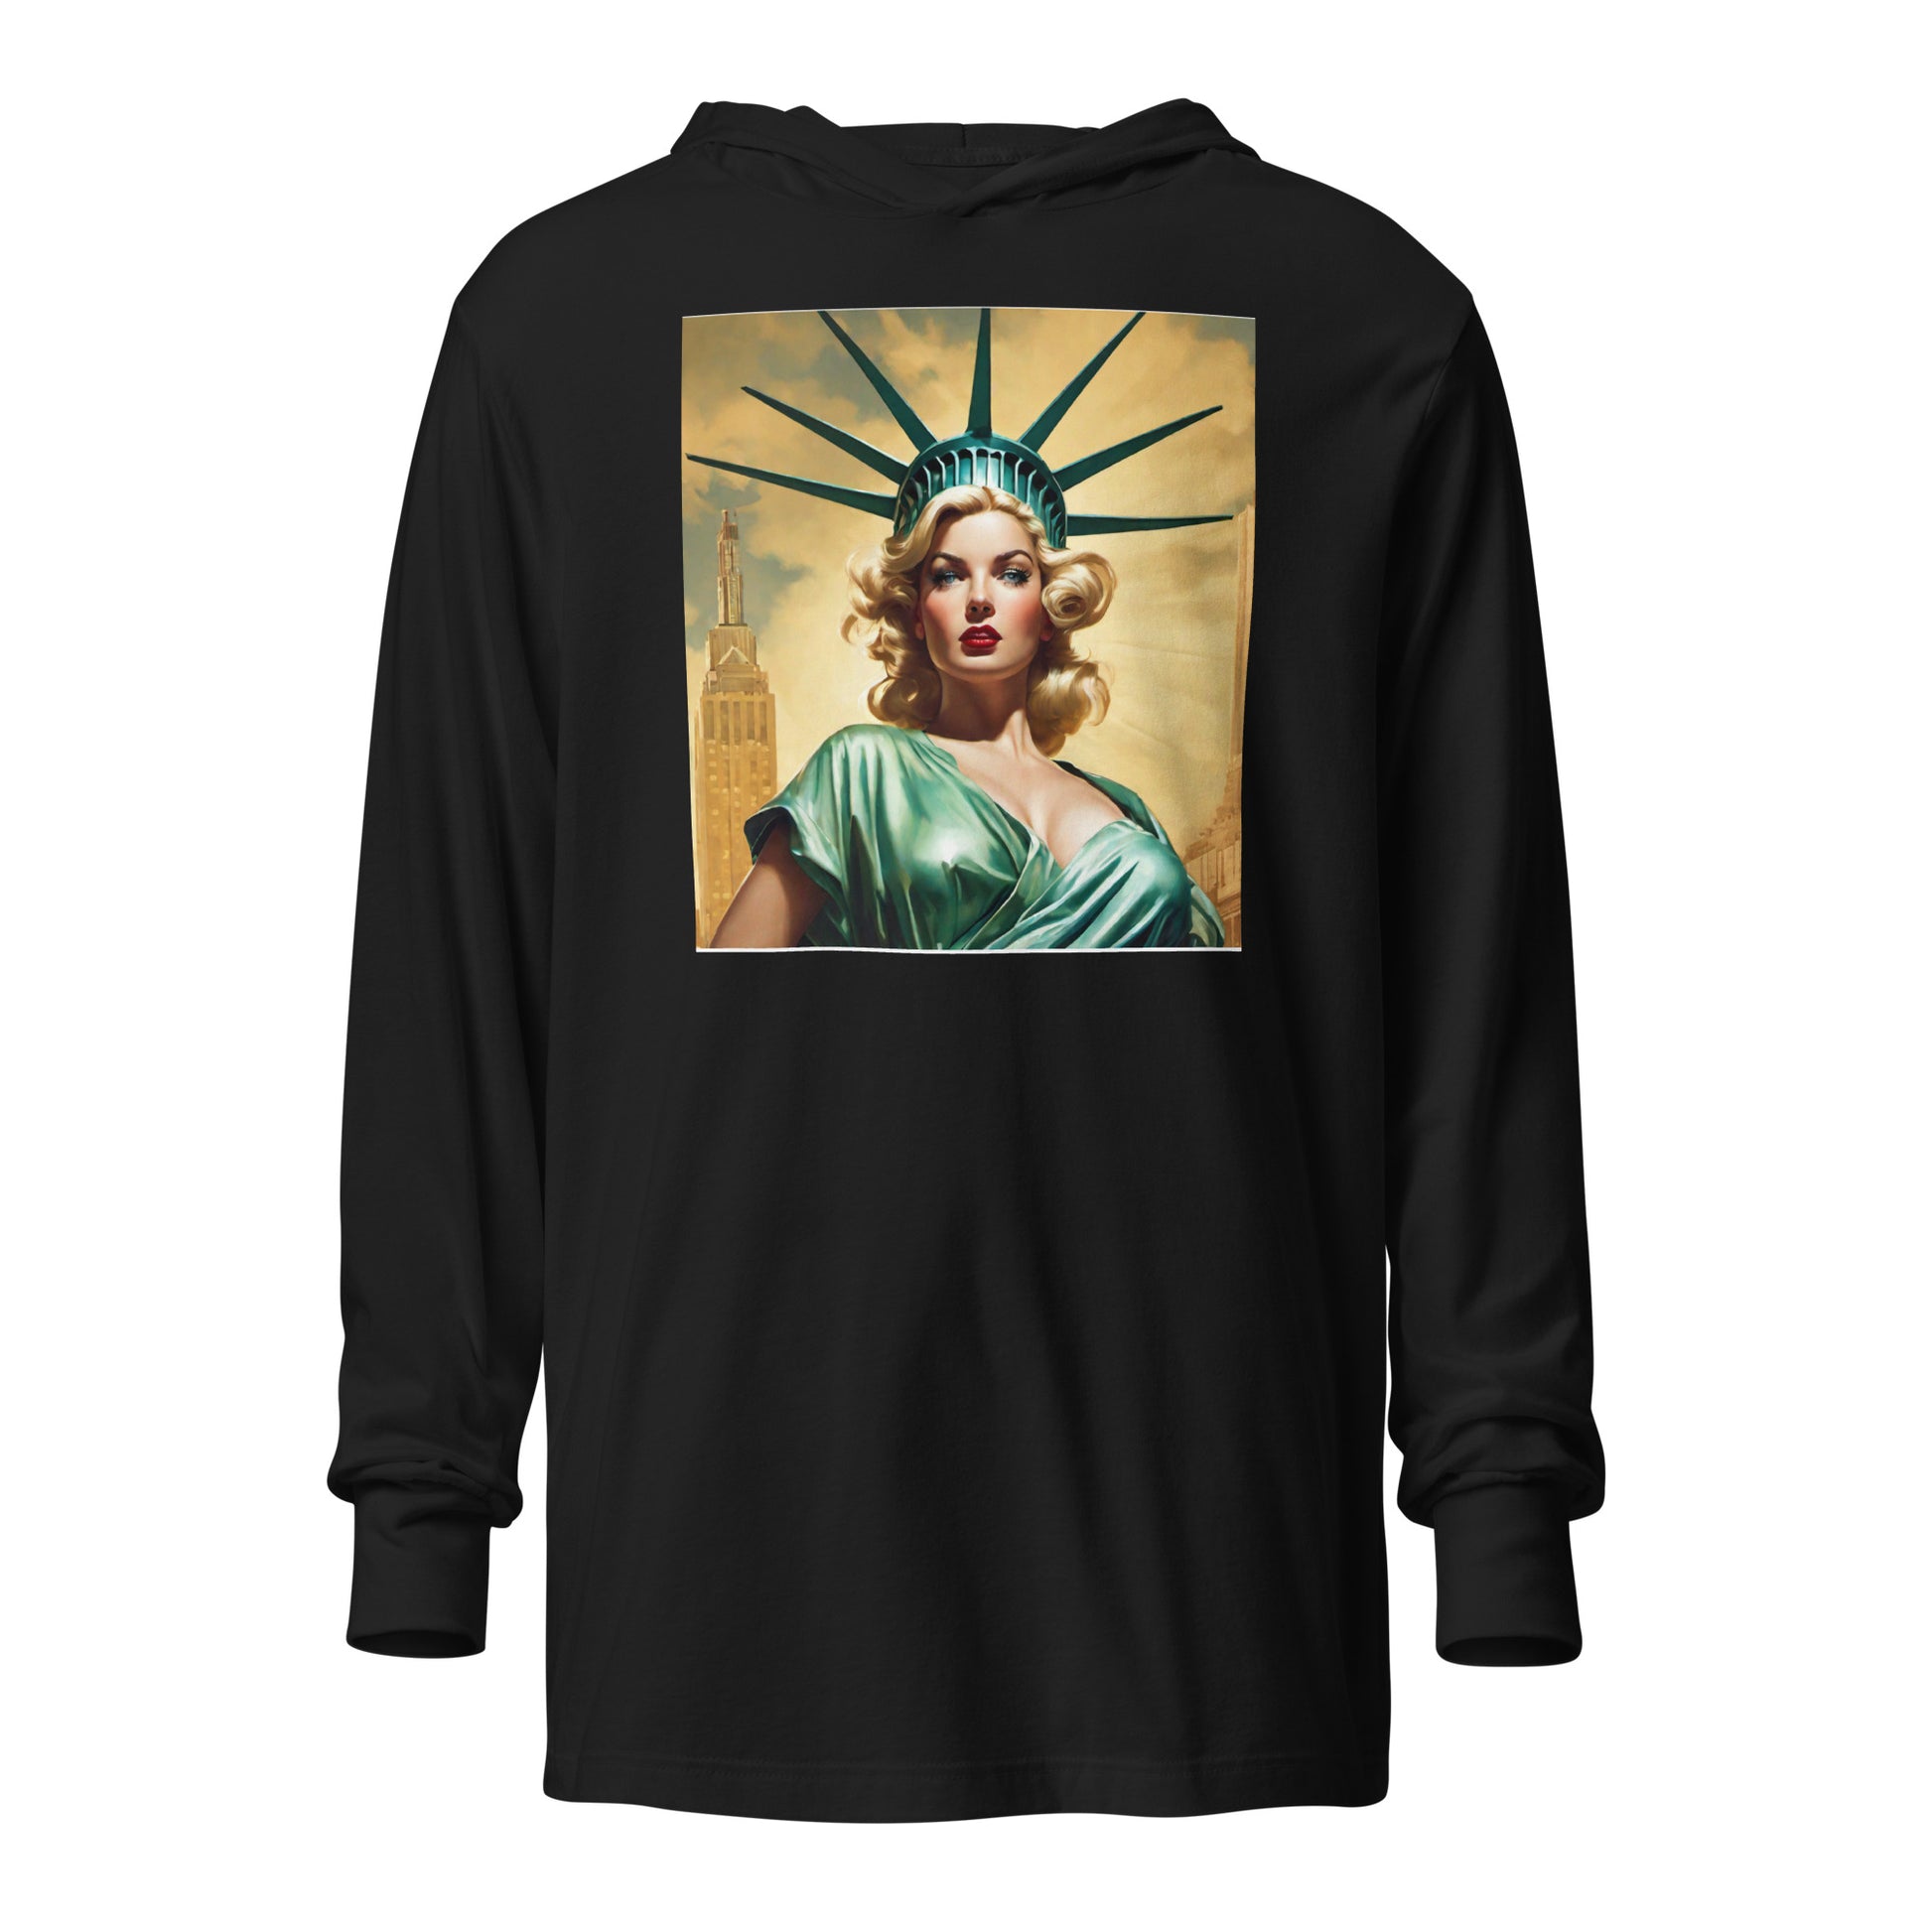 Beautiful Lady Liberty Hooded Long-Sleeve Tee Black